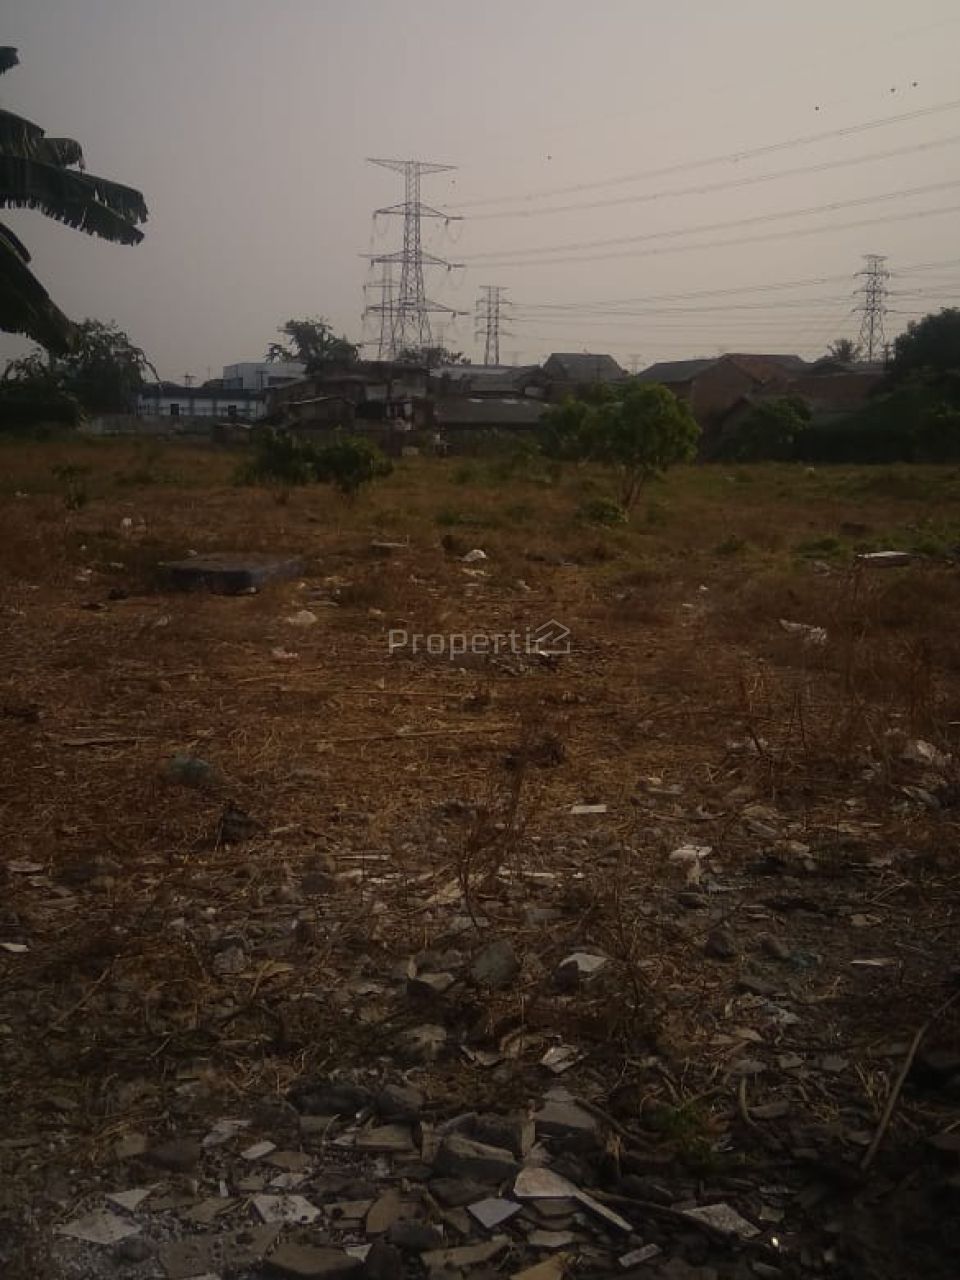 Land for Housing in Kebon Pala, East Jakarta, DKI Jakarta